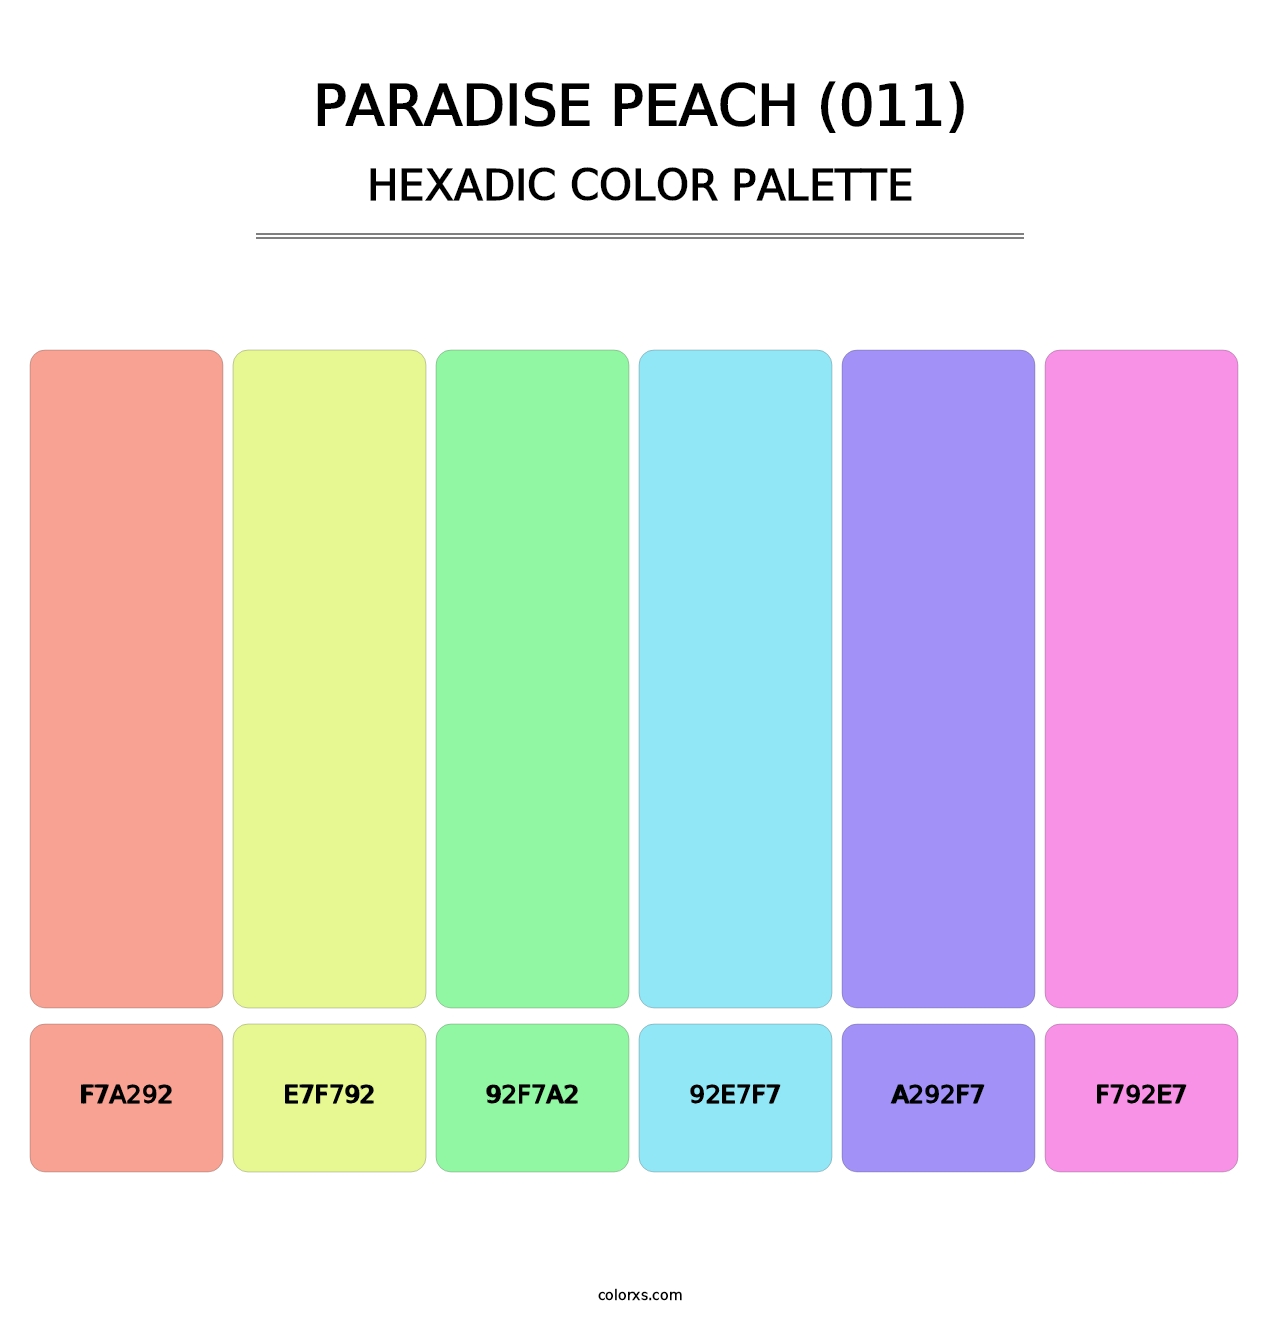 Paradise Peach (011) - Hexadic Color Palette